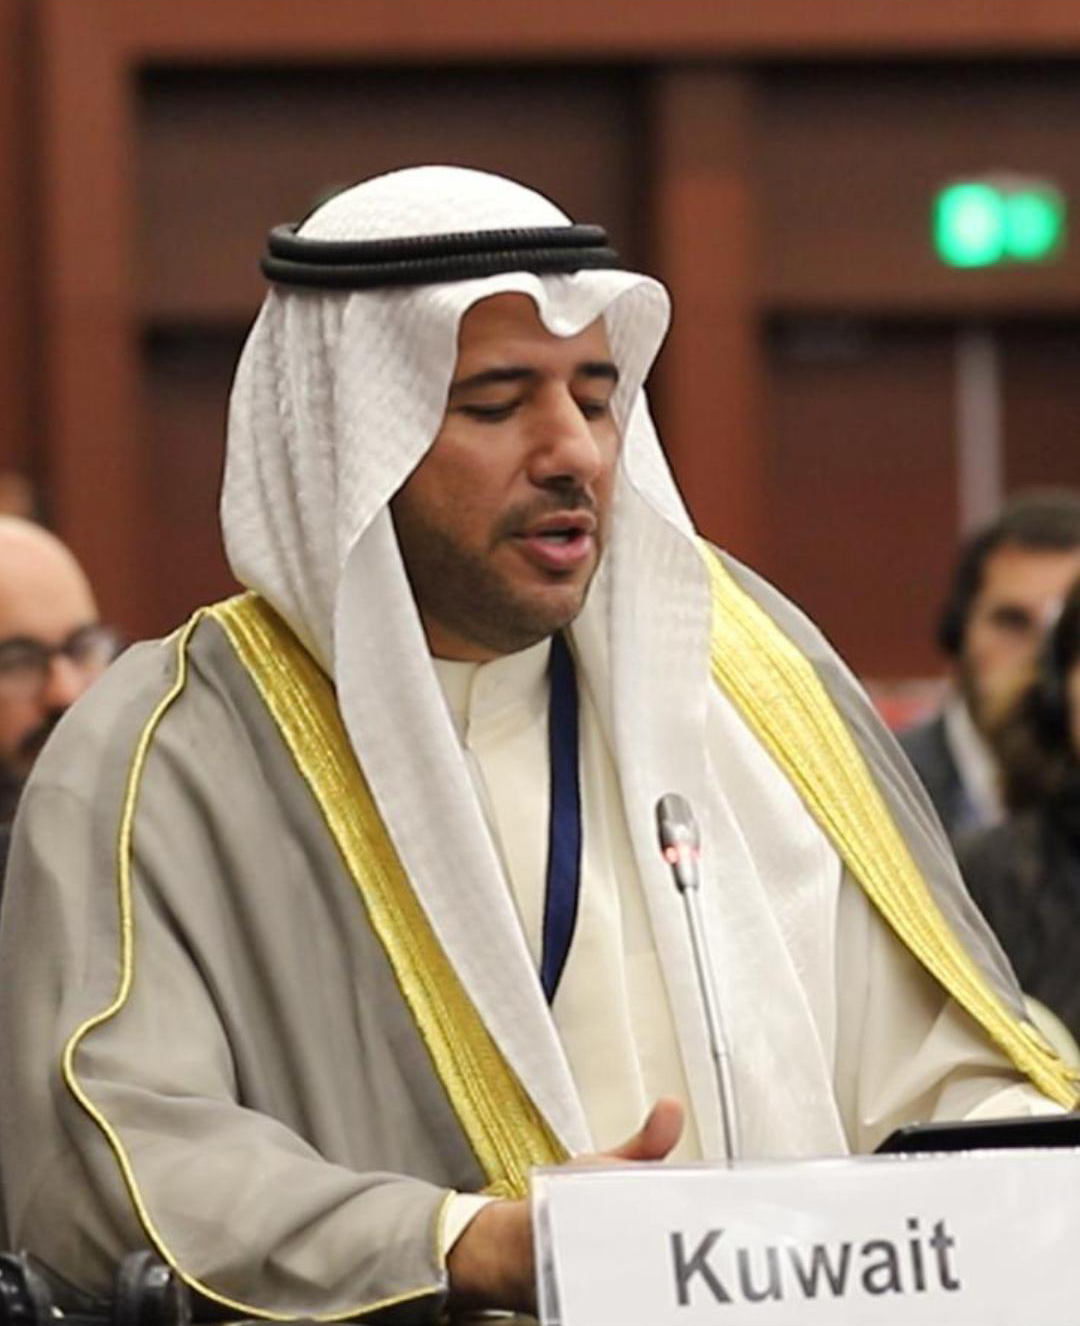 Chairman of Kuwait Environment Public Authority (EPA) Sheikh Abdullah Ahmad Al-Humoud Al-Sabah addressing a seminar